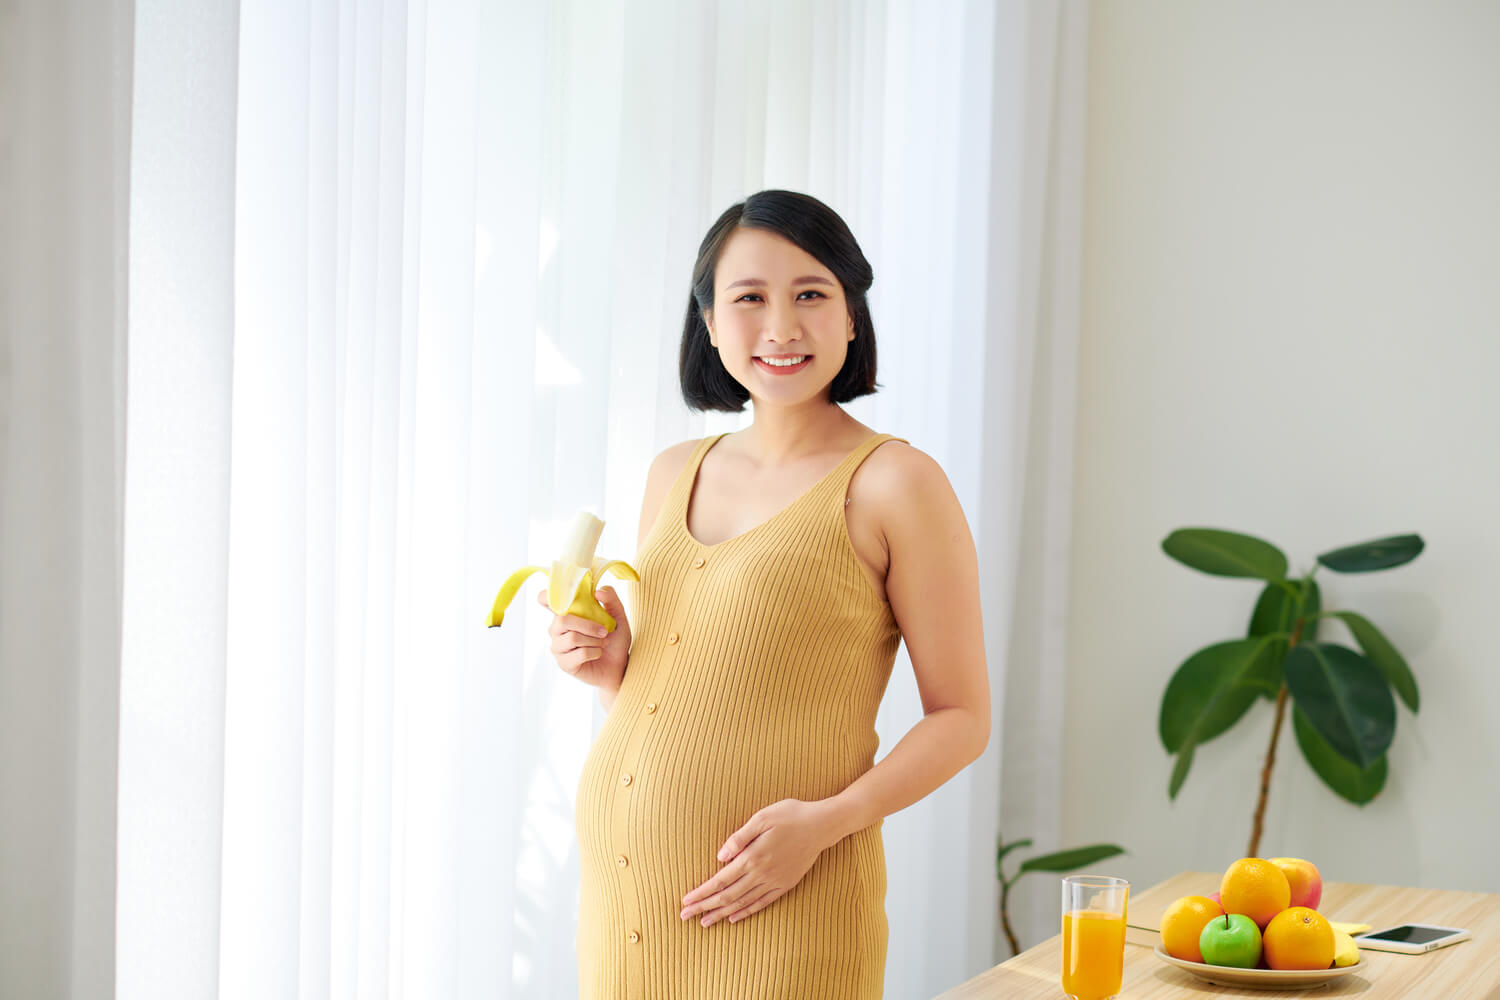 Benefits of Eating Bananas During Pregnancy